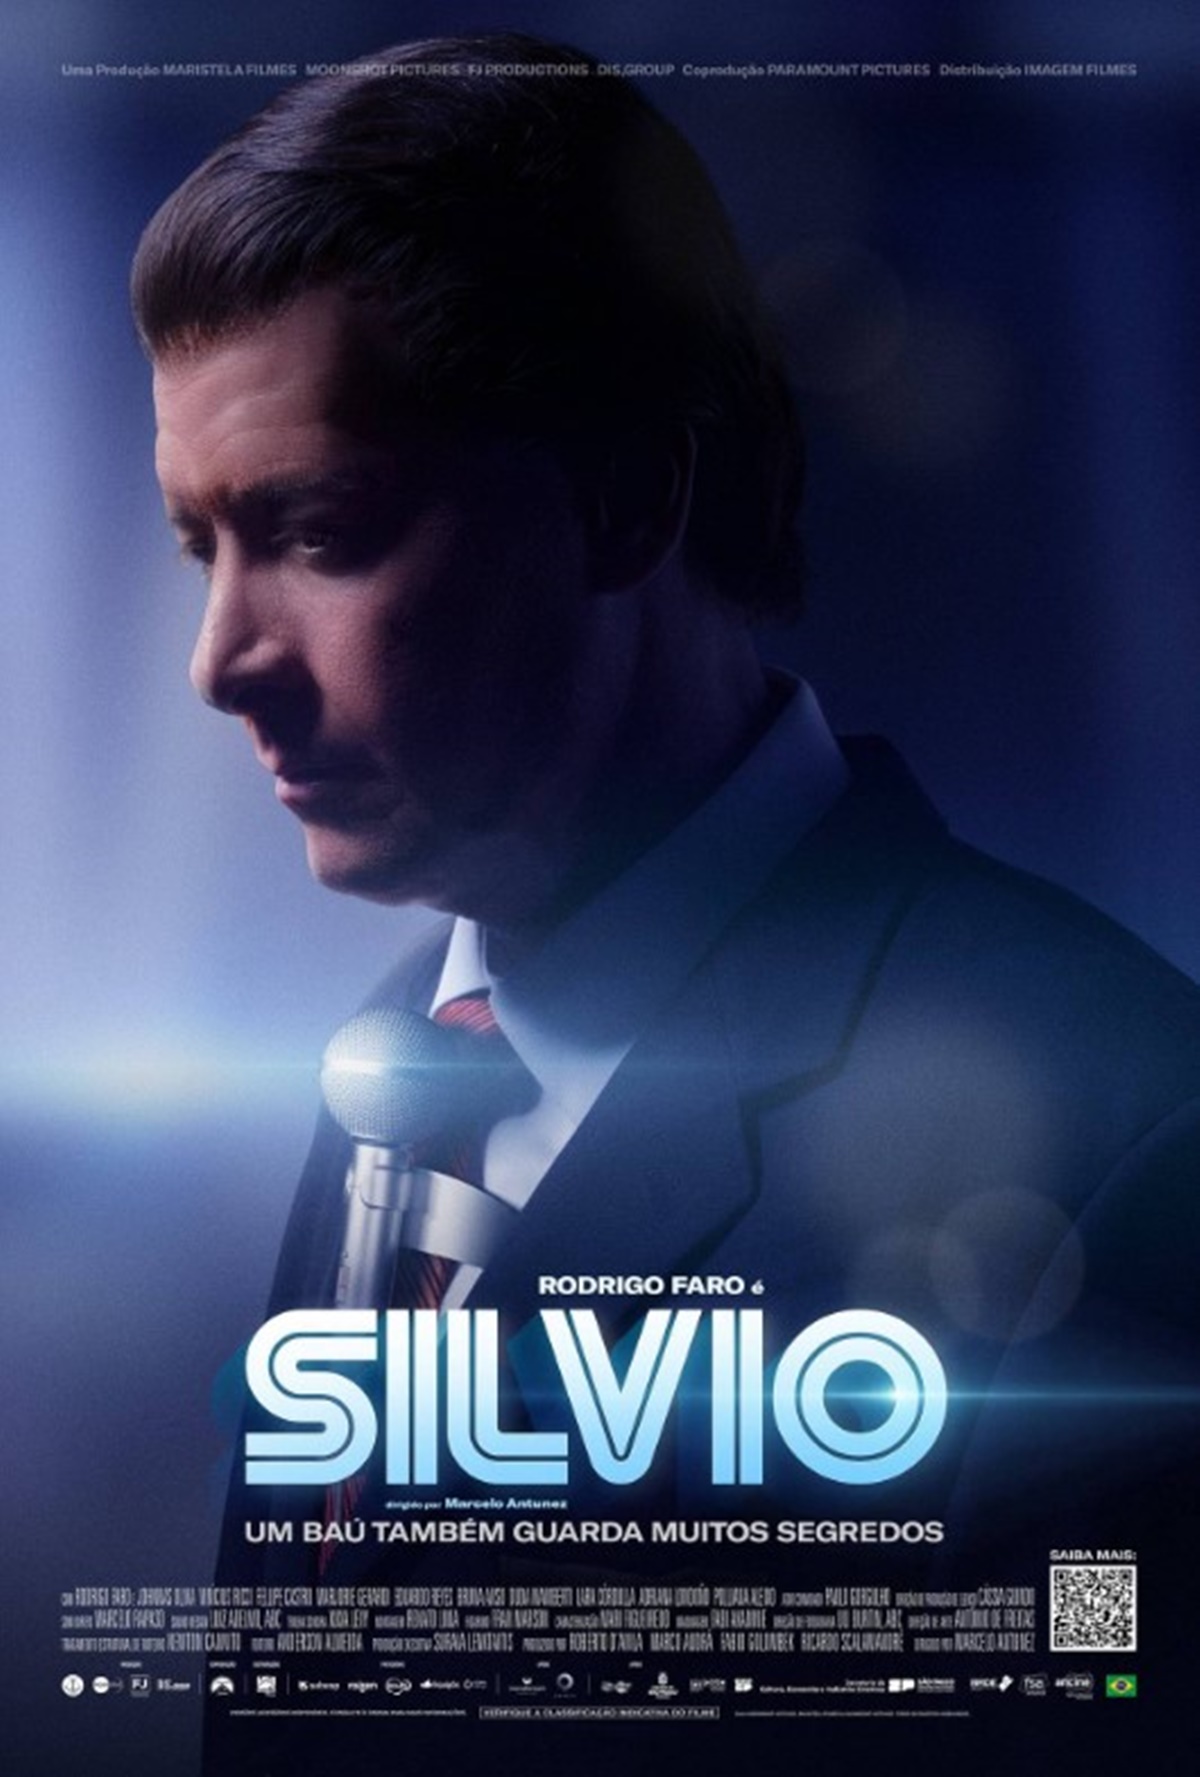 Silvio - cinebiografia